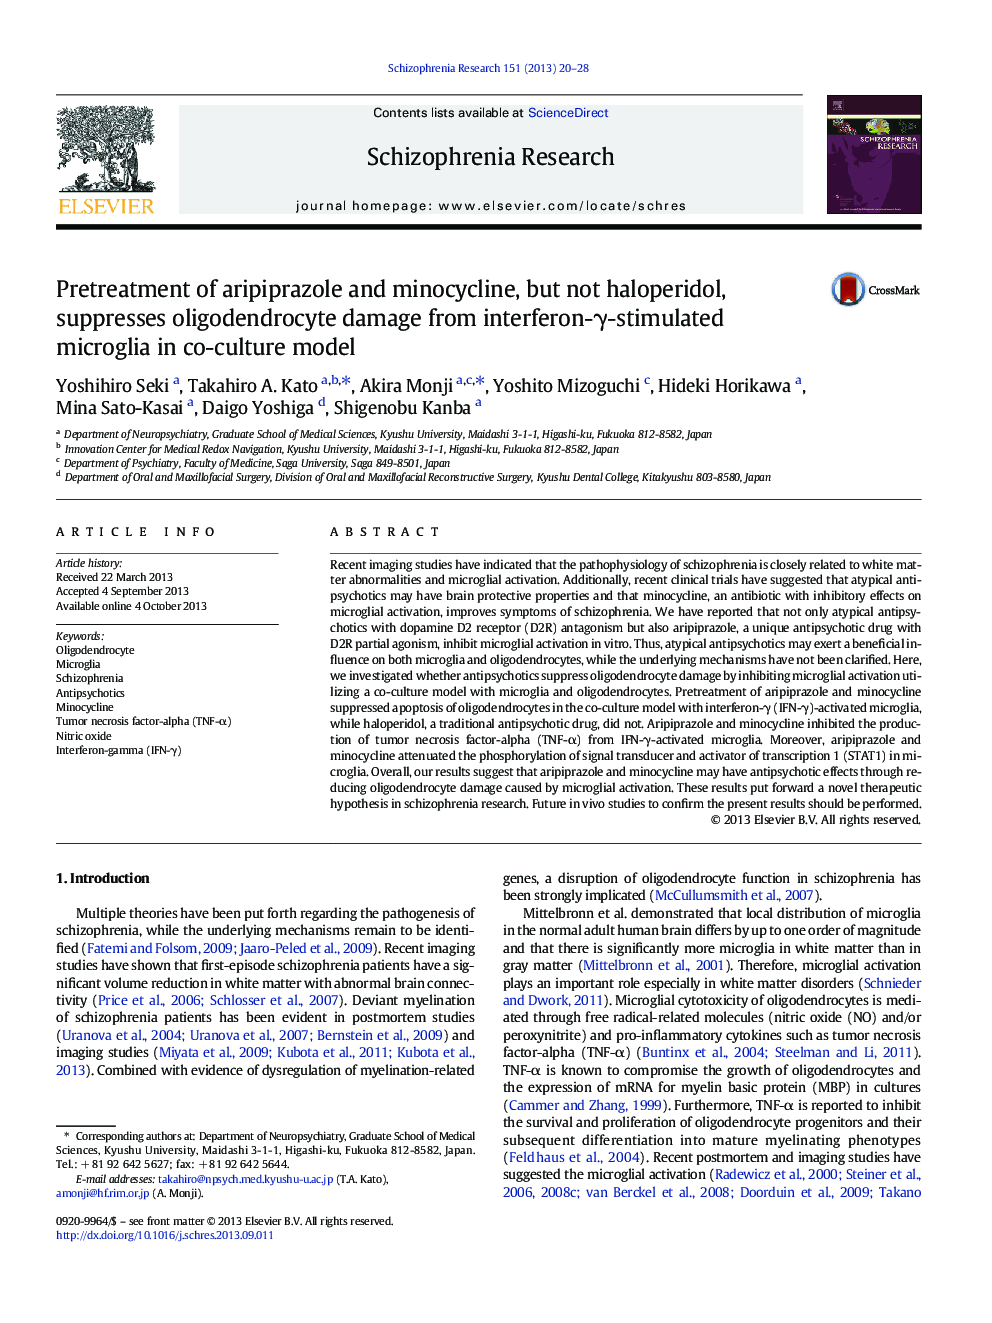 Pretreatment of aripiprazole and minocycline, but not haloperidol, suppresses oligodendrocyte damage from interferon-γ-stimulated microglia in co-culture model